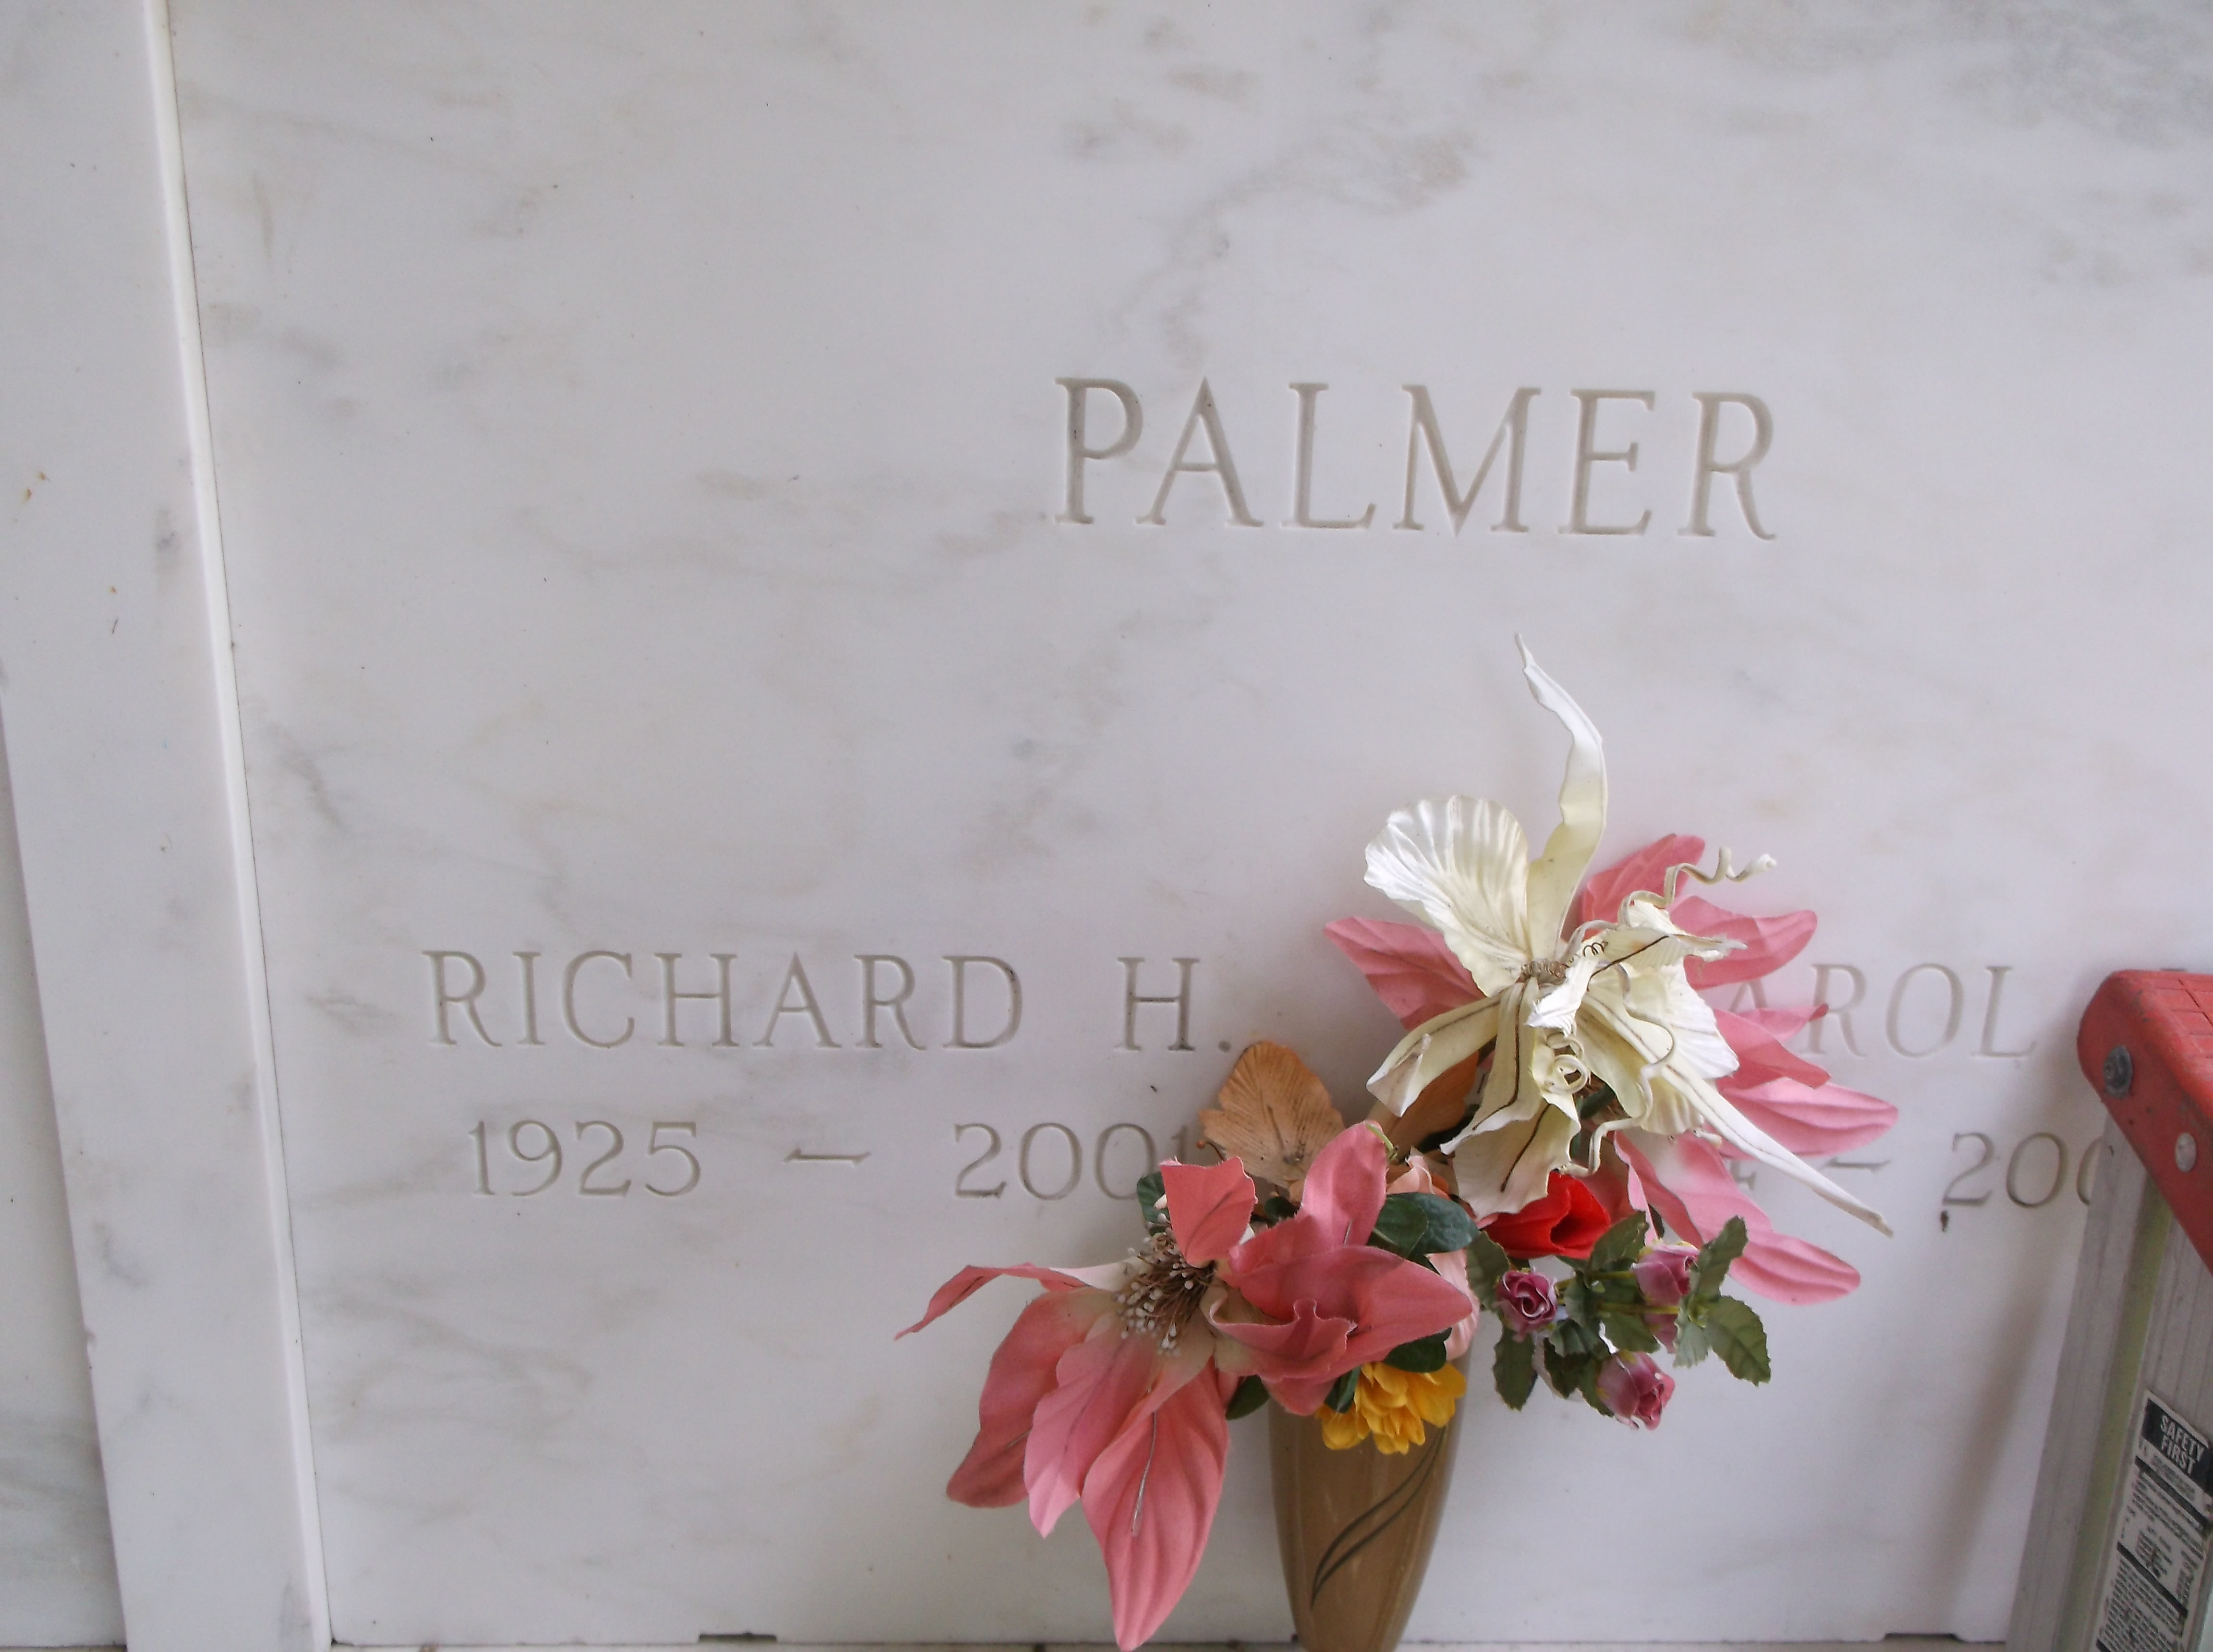 Richard H Palmer